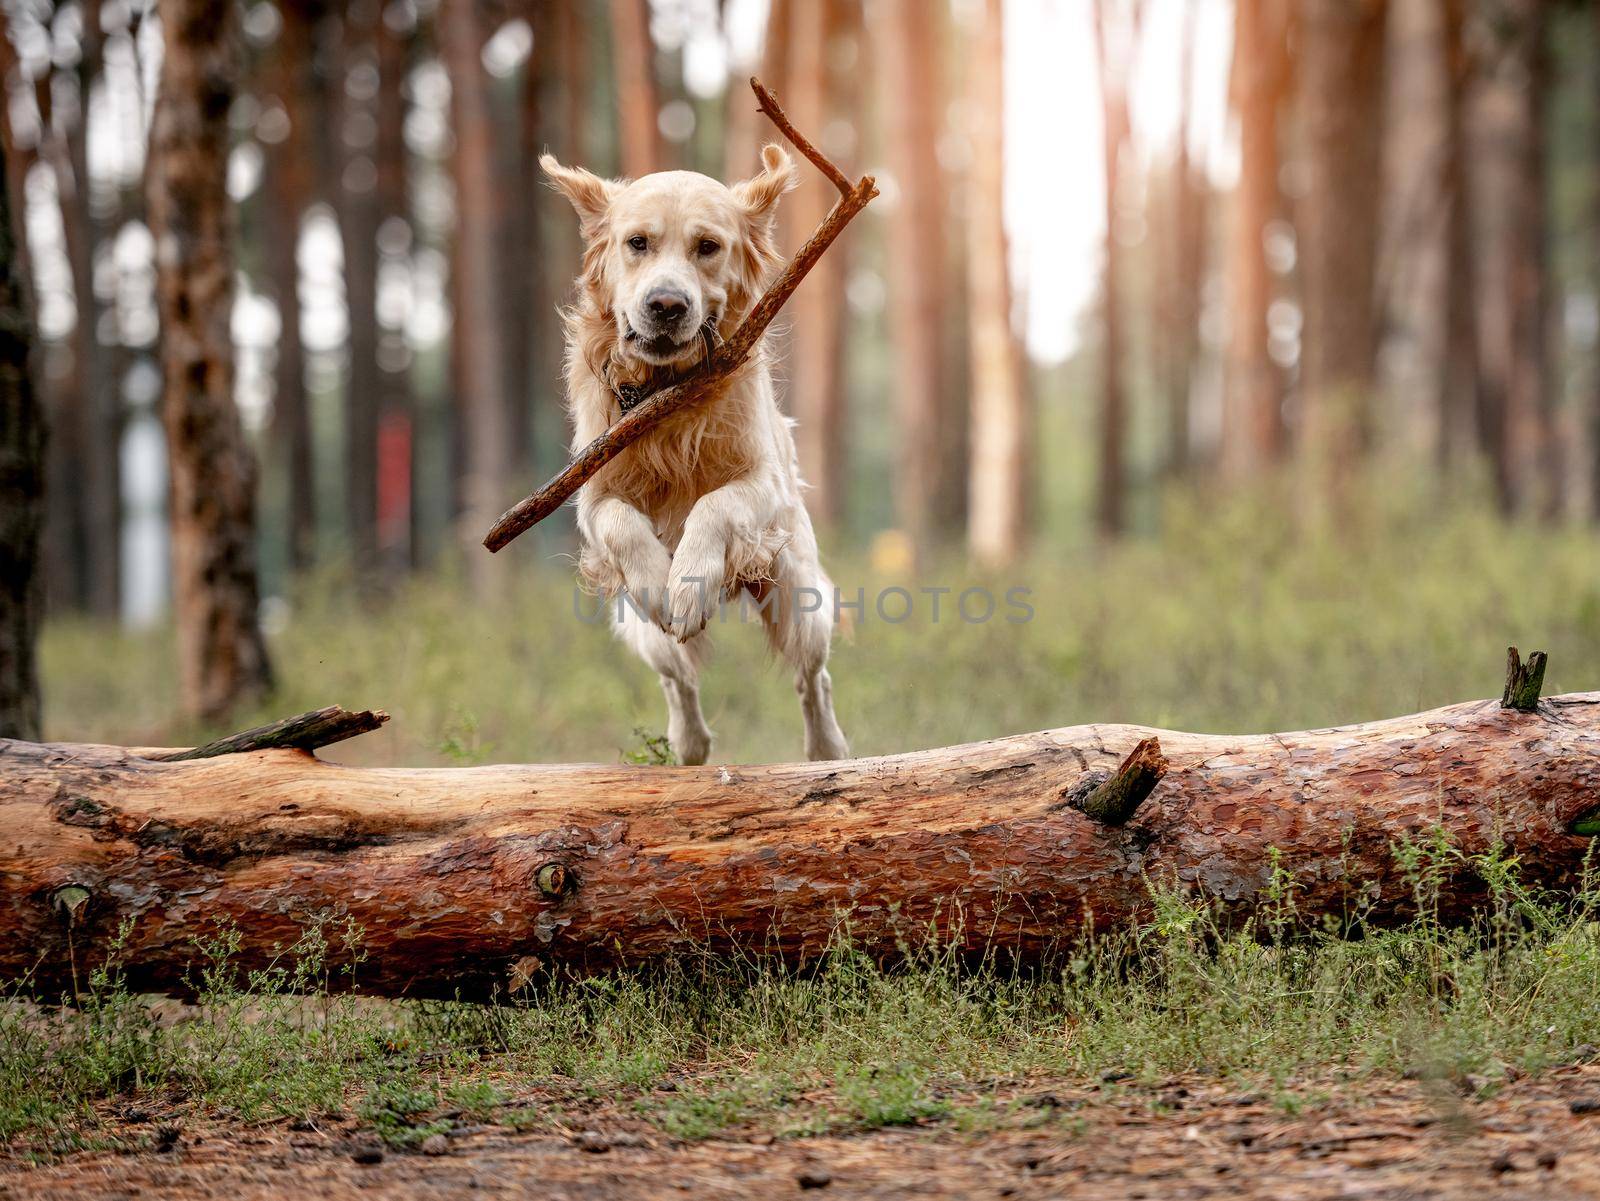 Golden retriever dog in the forest by tan4ikk1